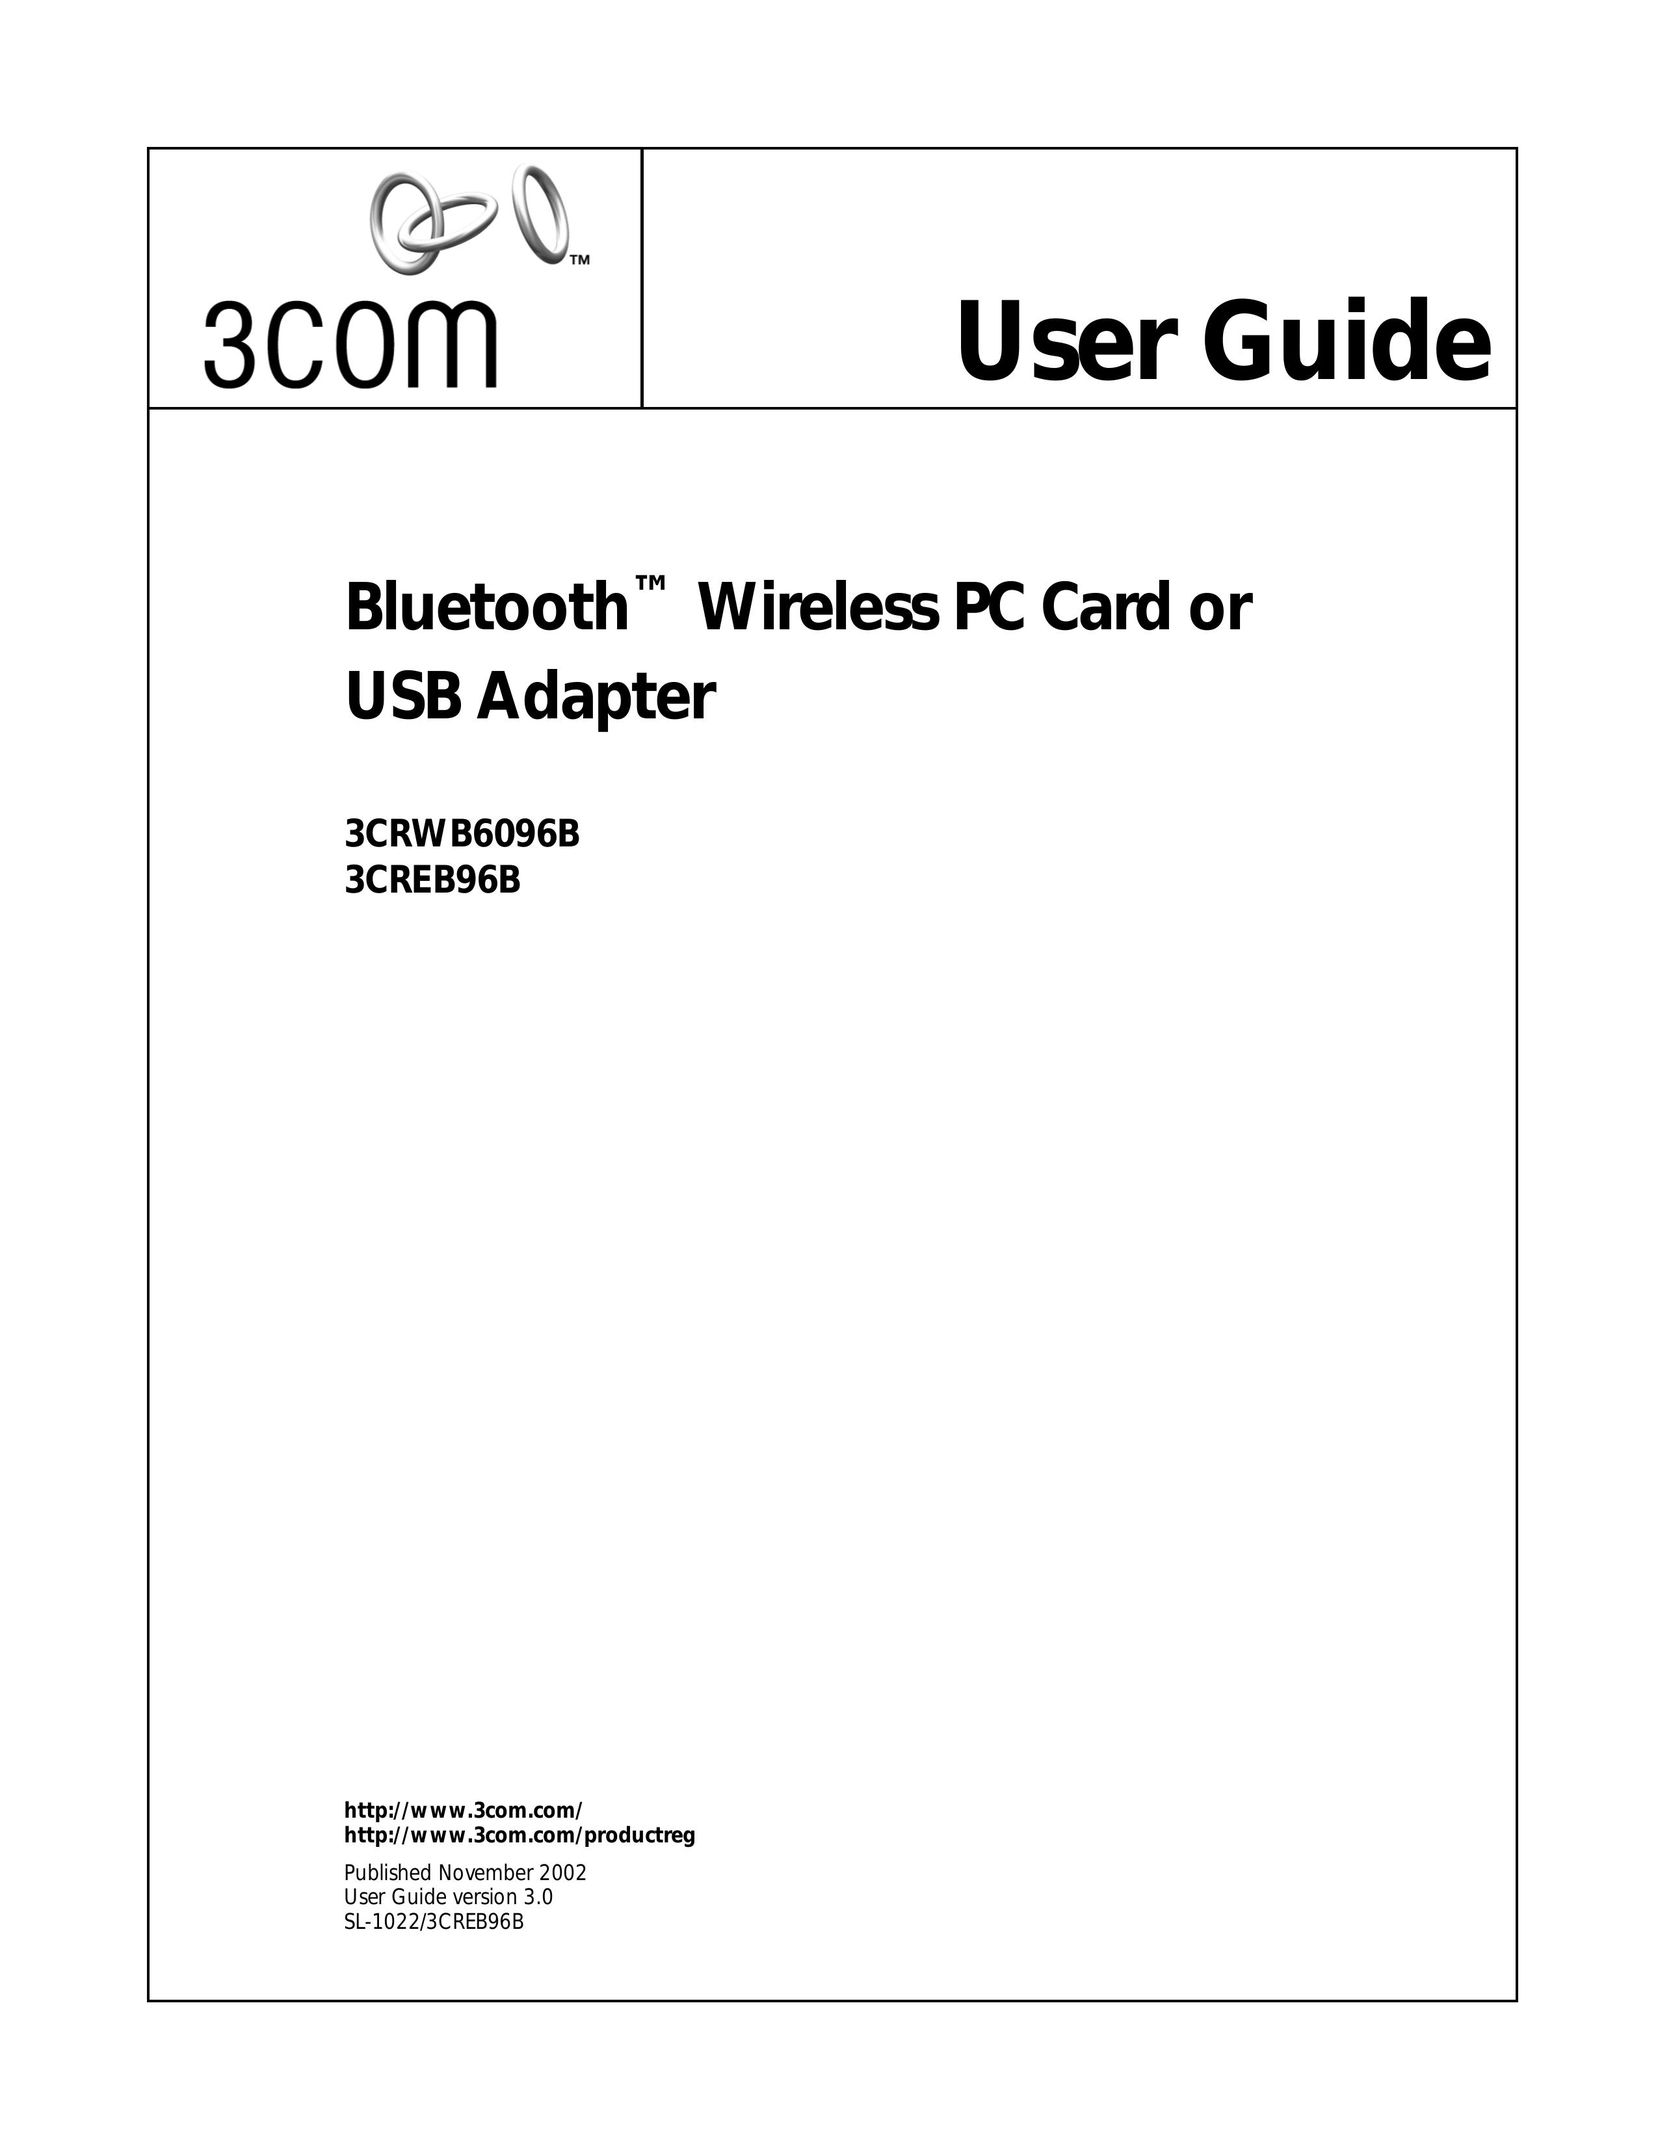 3Com 3CREB96B Network Card User Manual